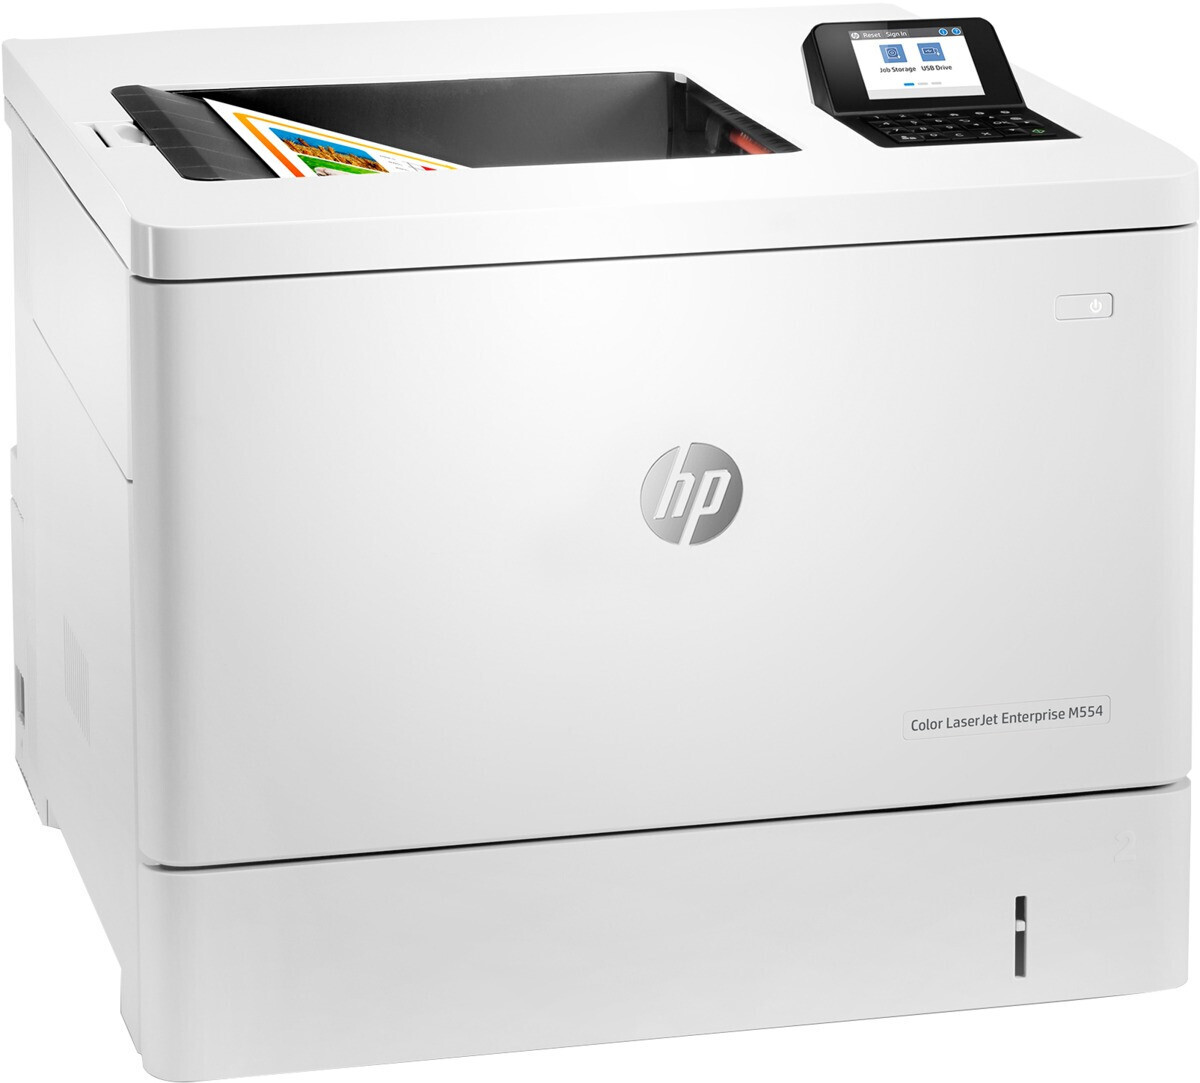 HP Color LaserJet Enterprise M554dn színes lézer egyfunkciós nyomtató
